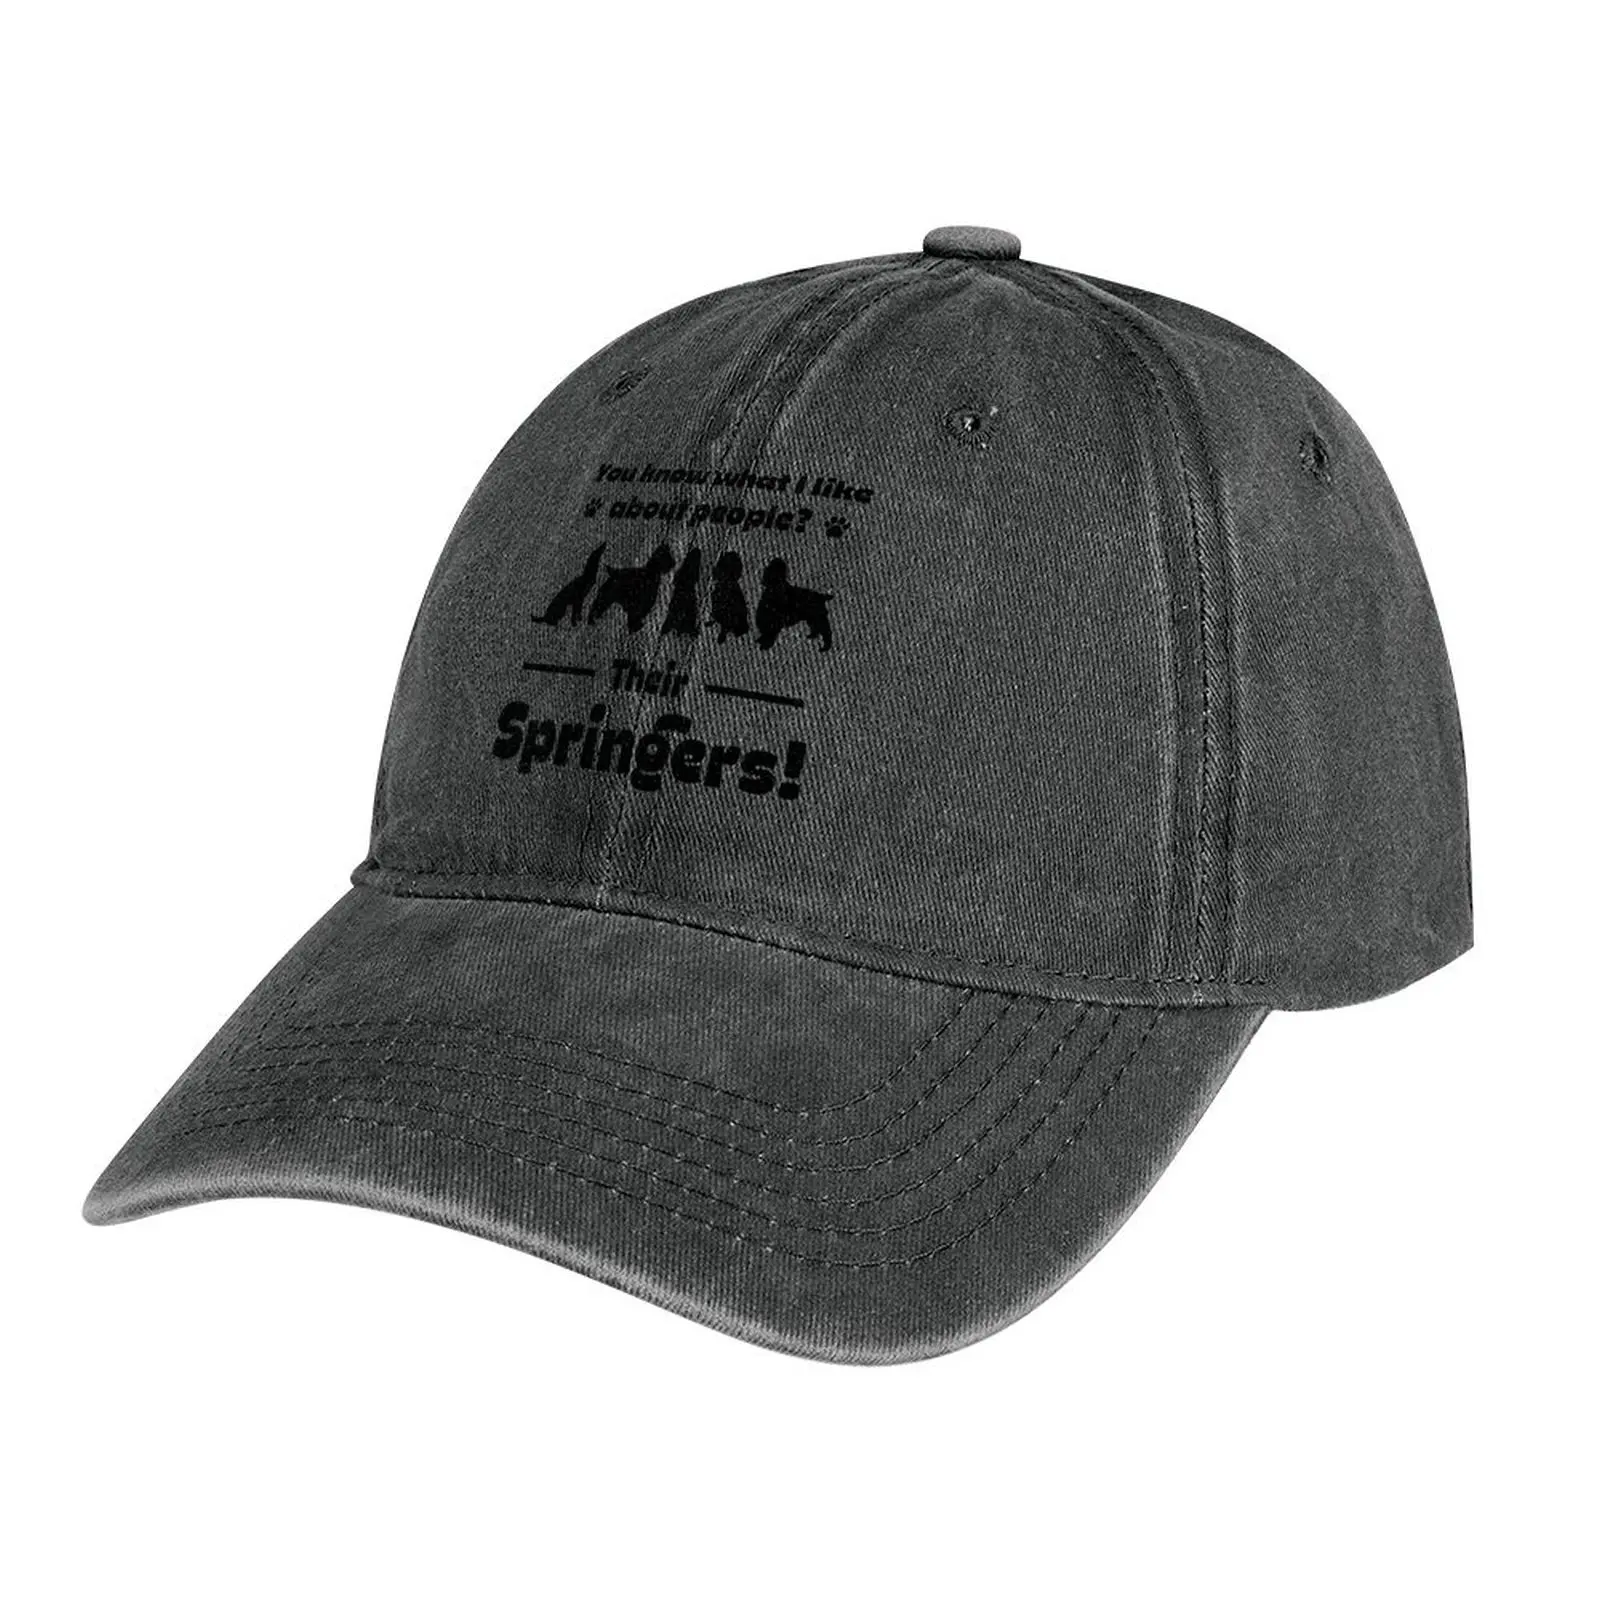 

Professional English Springer Spaniel Groomer Cowboy Hat Designer Hat derby hat Hood Golf Man For Women Men's